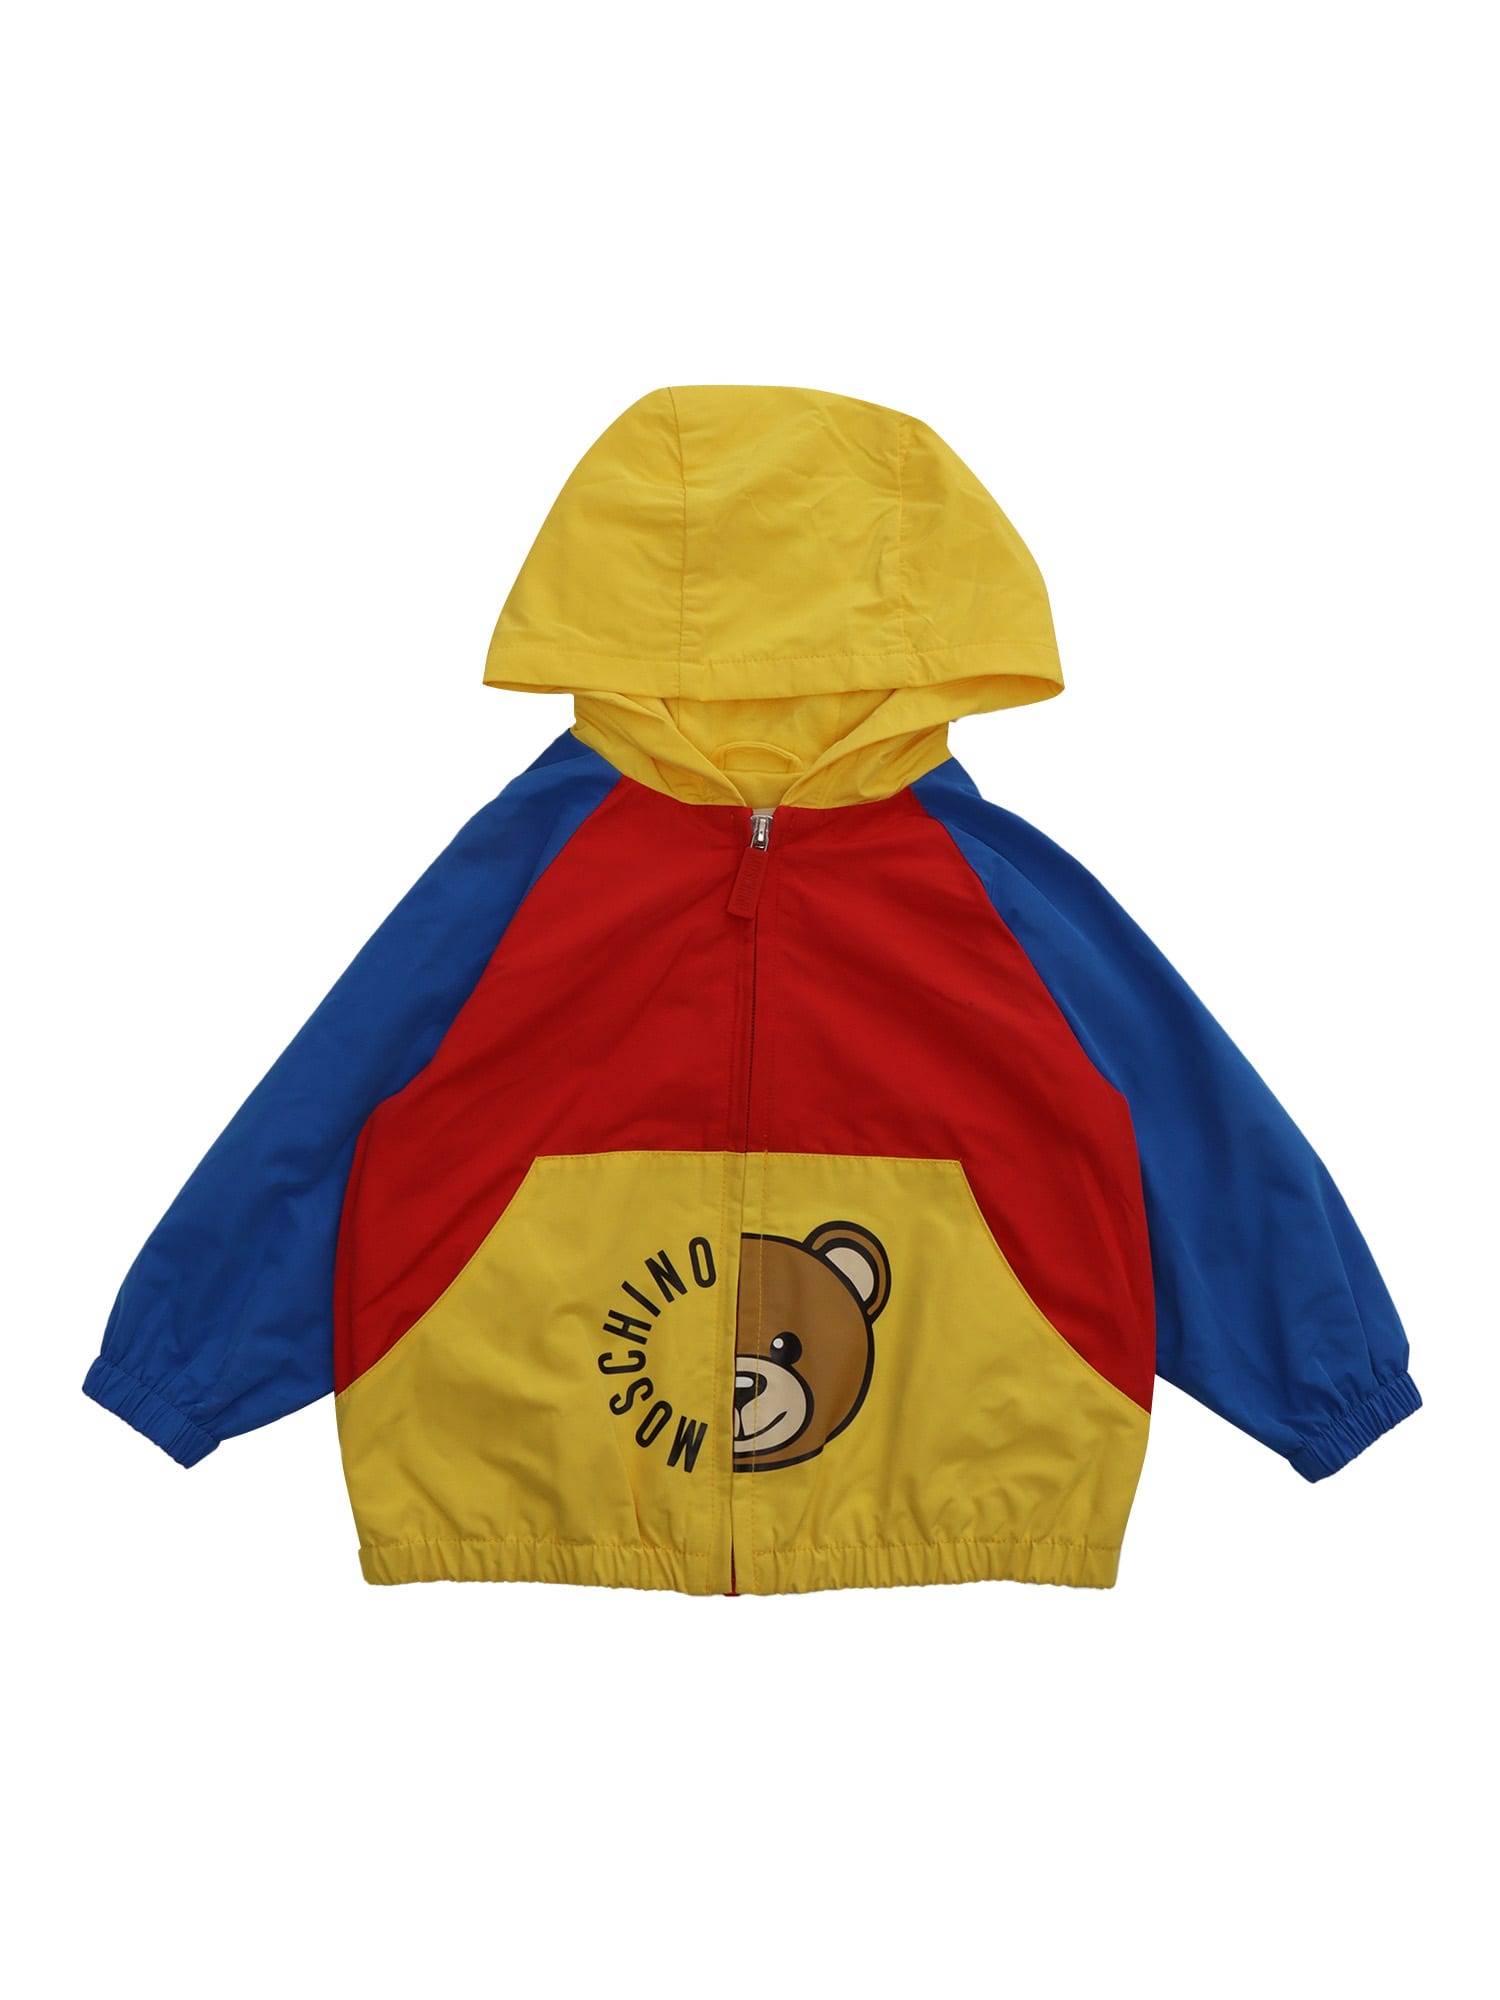 Moschino Kids' Multicolor Jacket